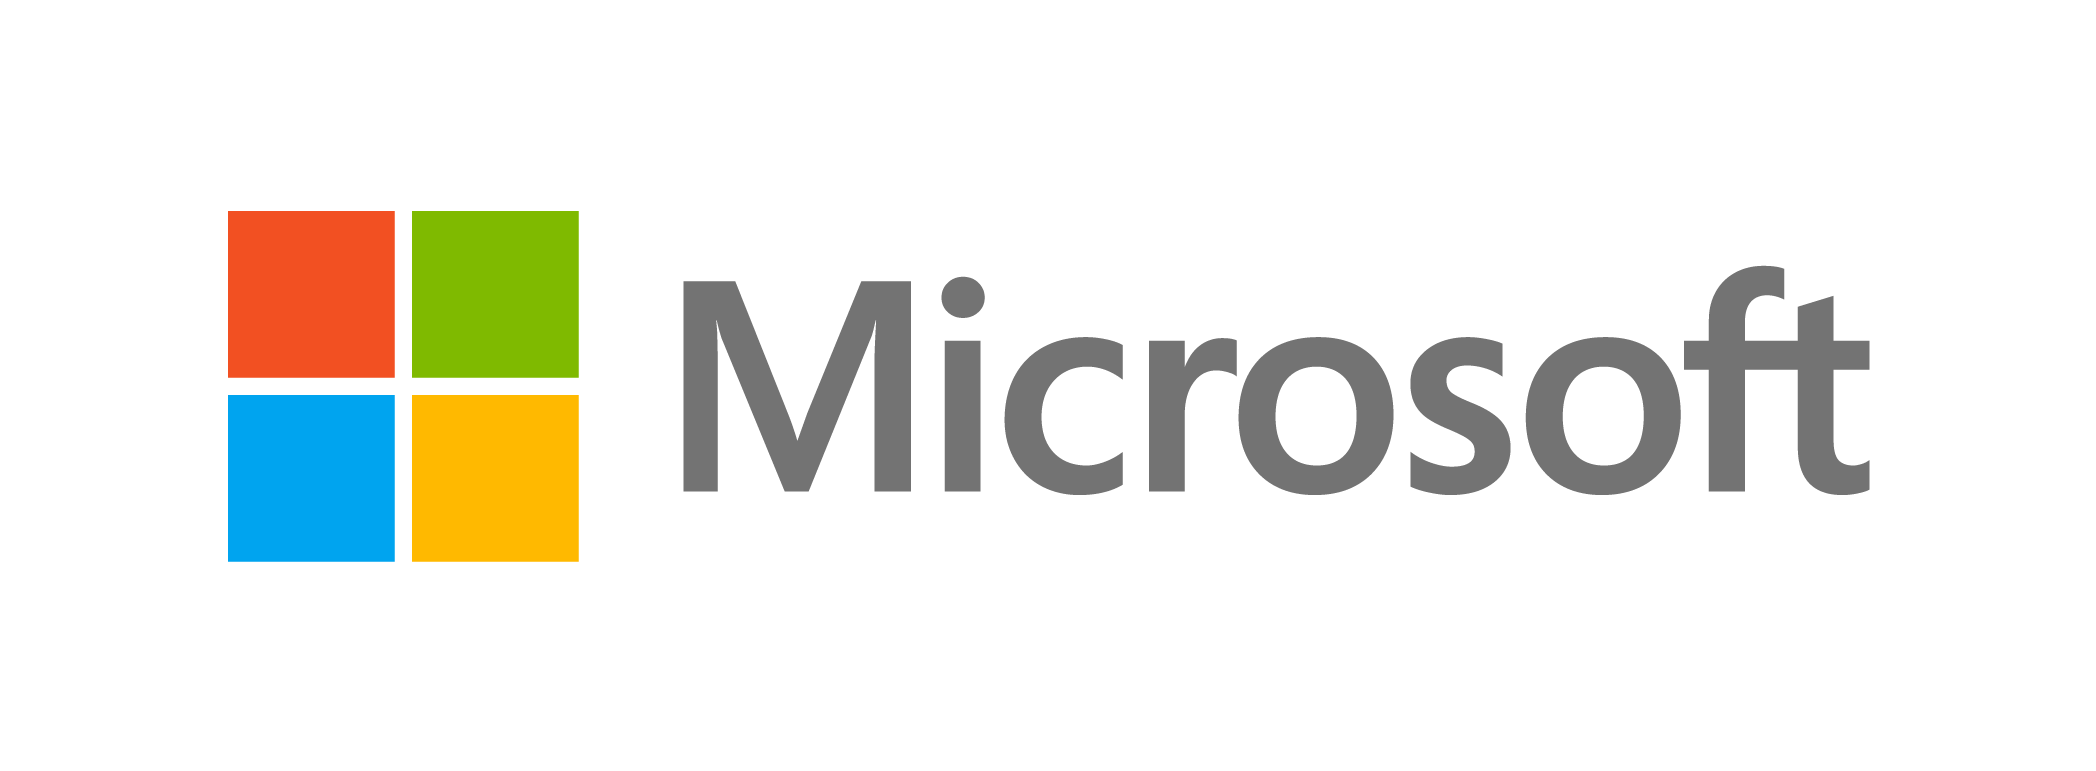 Microsoft 標誌的 Microsoft